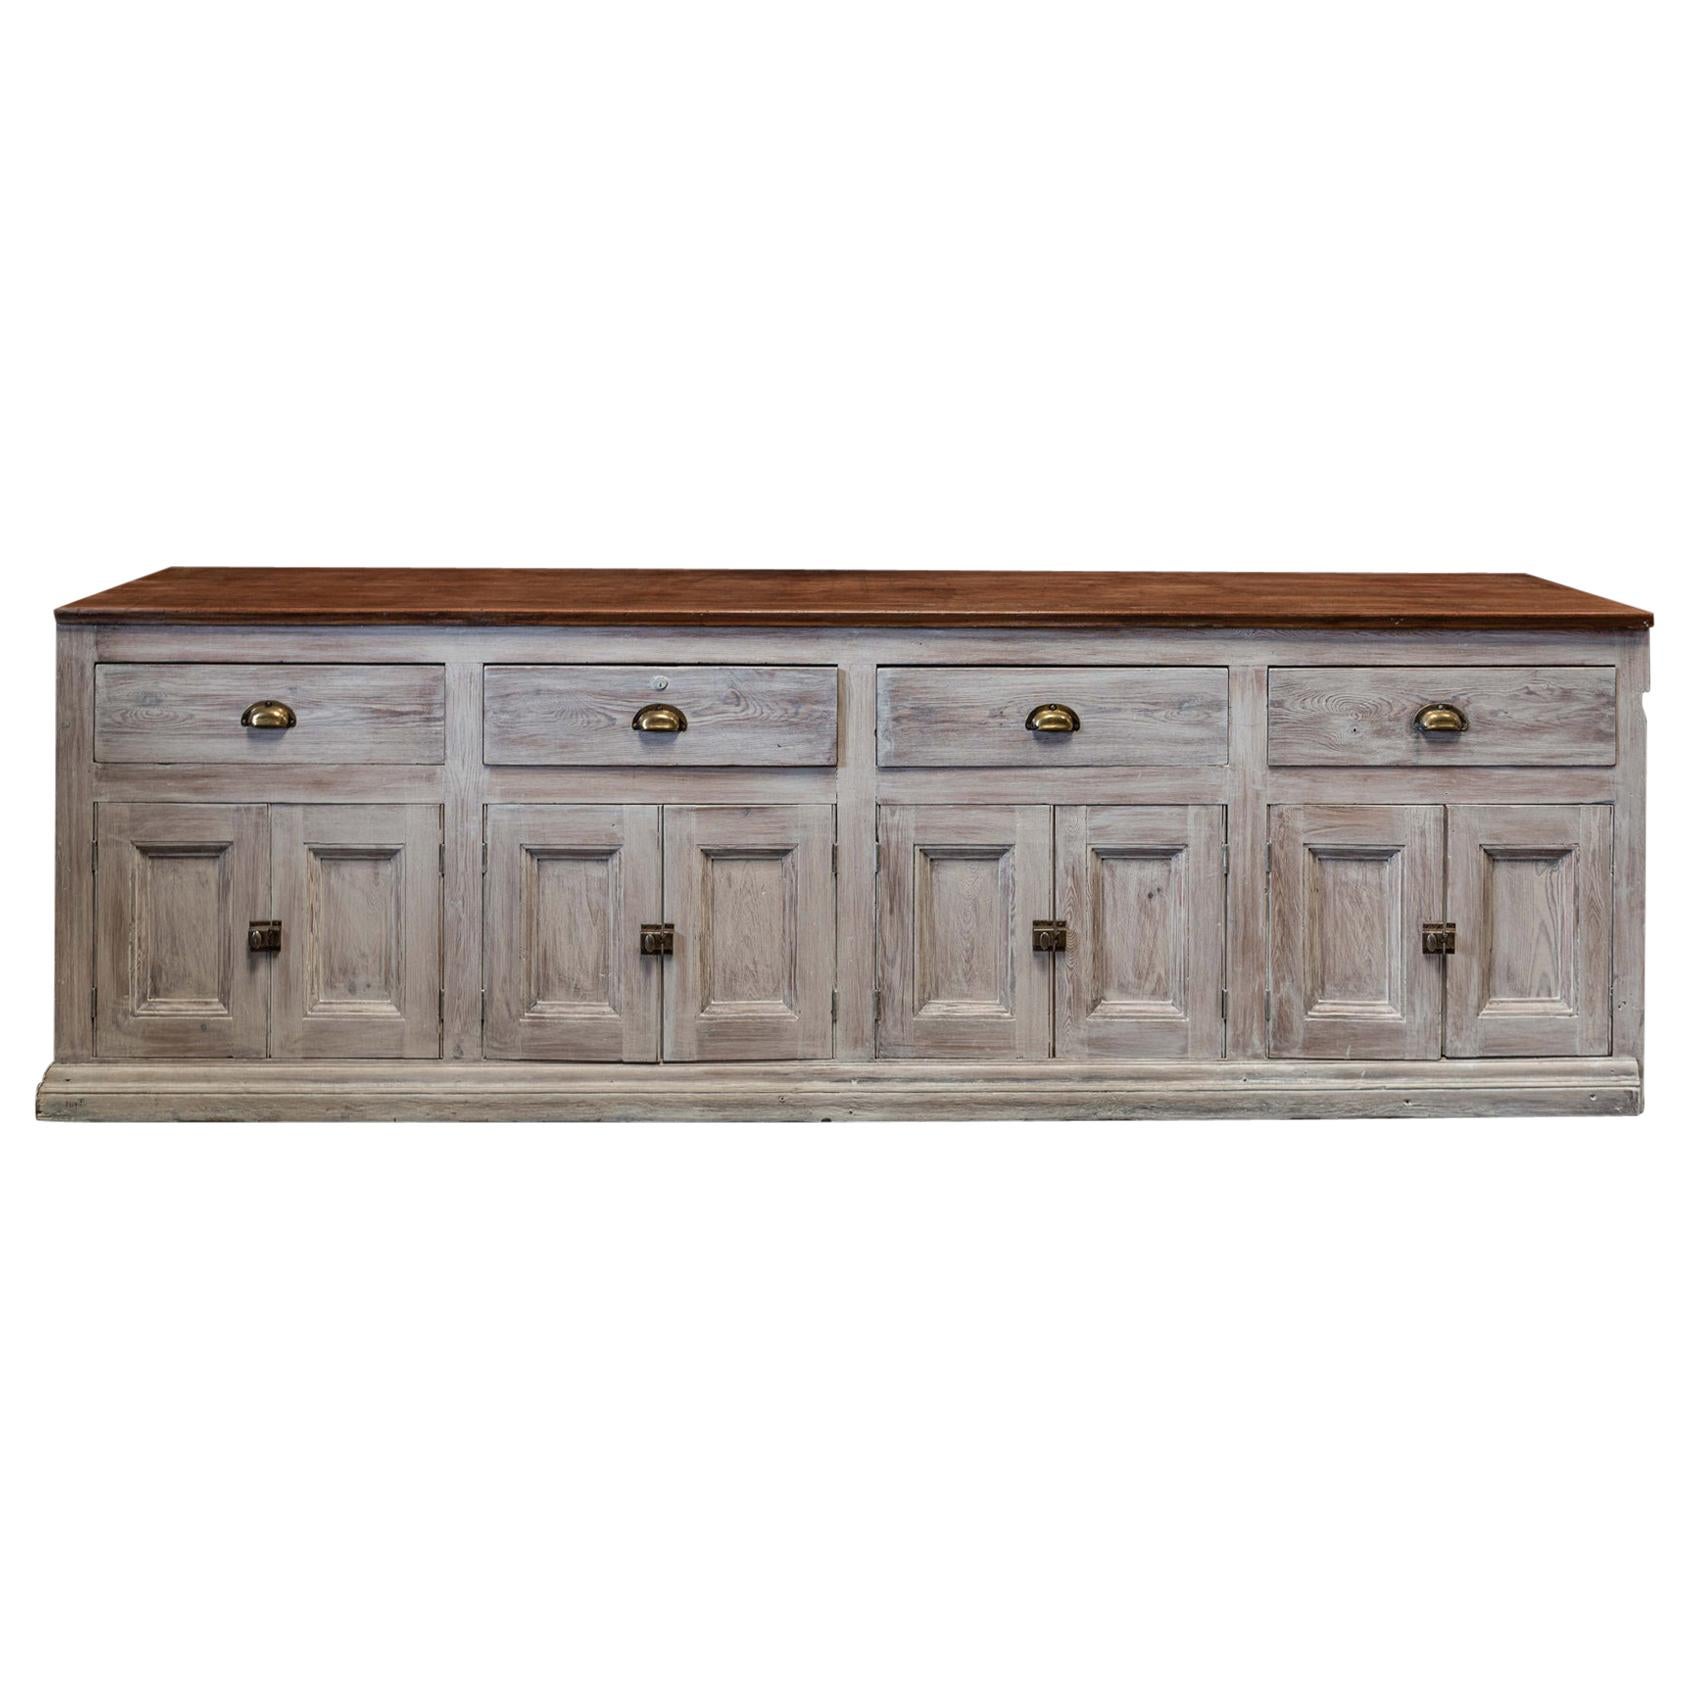 19th Century English Limewashed Pine Counter / Dresser Base / Sideboard